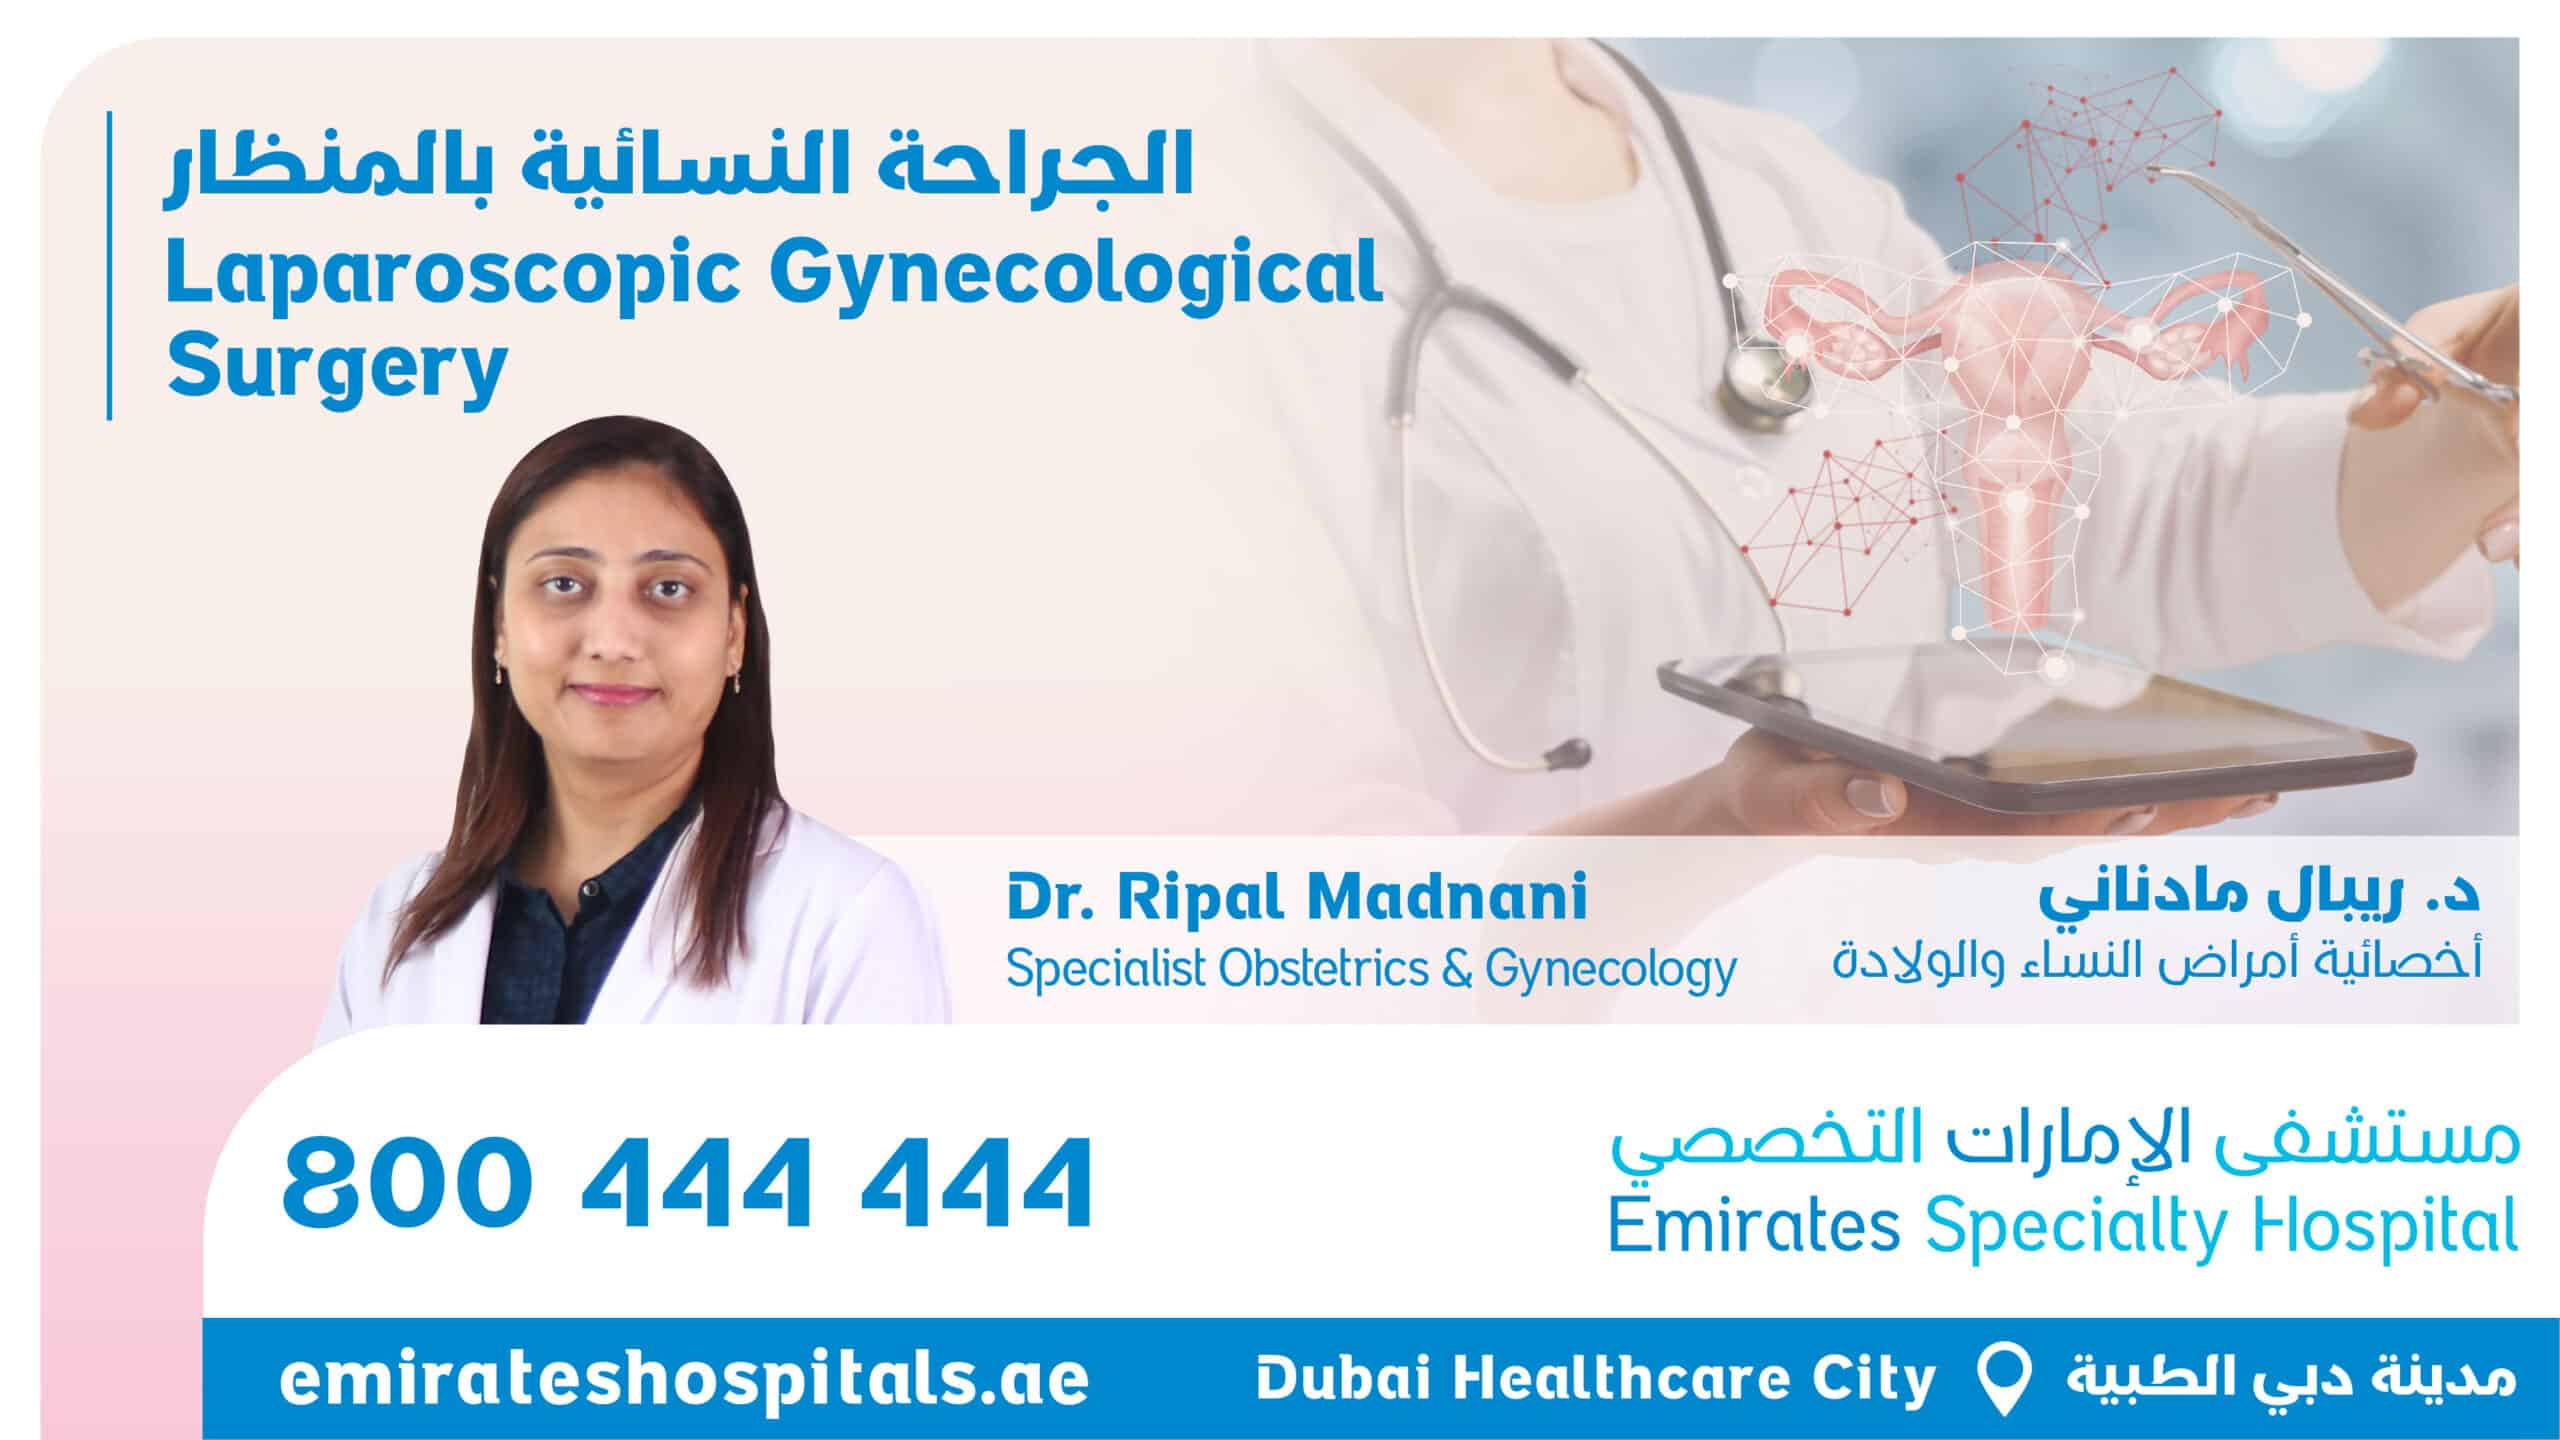 Laparoscopic Gynecological Surgery - Dr. Ripal Madnani, Specialist Obstetrics & Gynecology